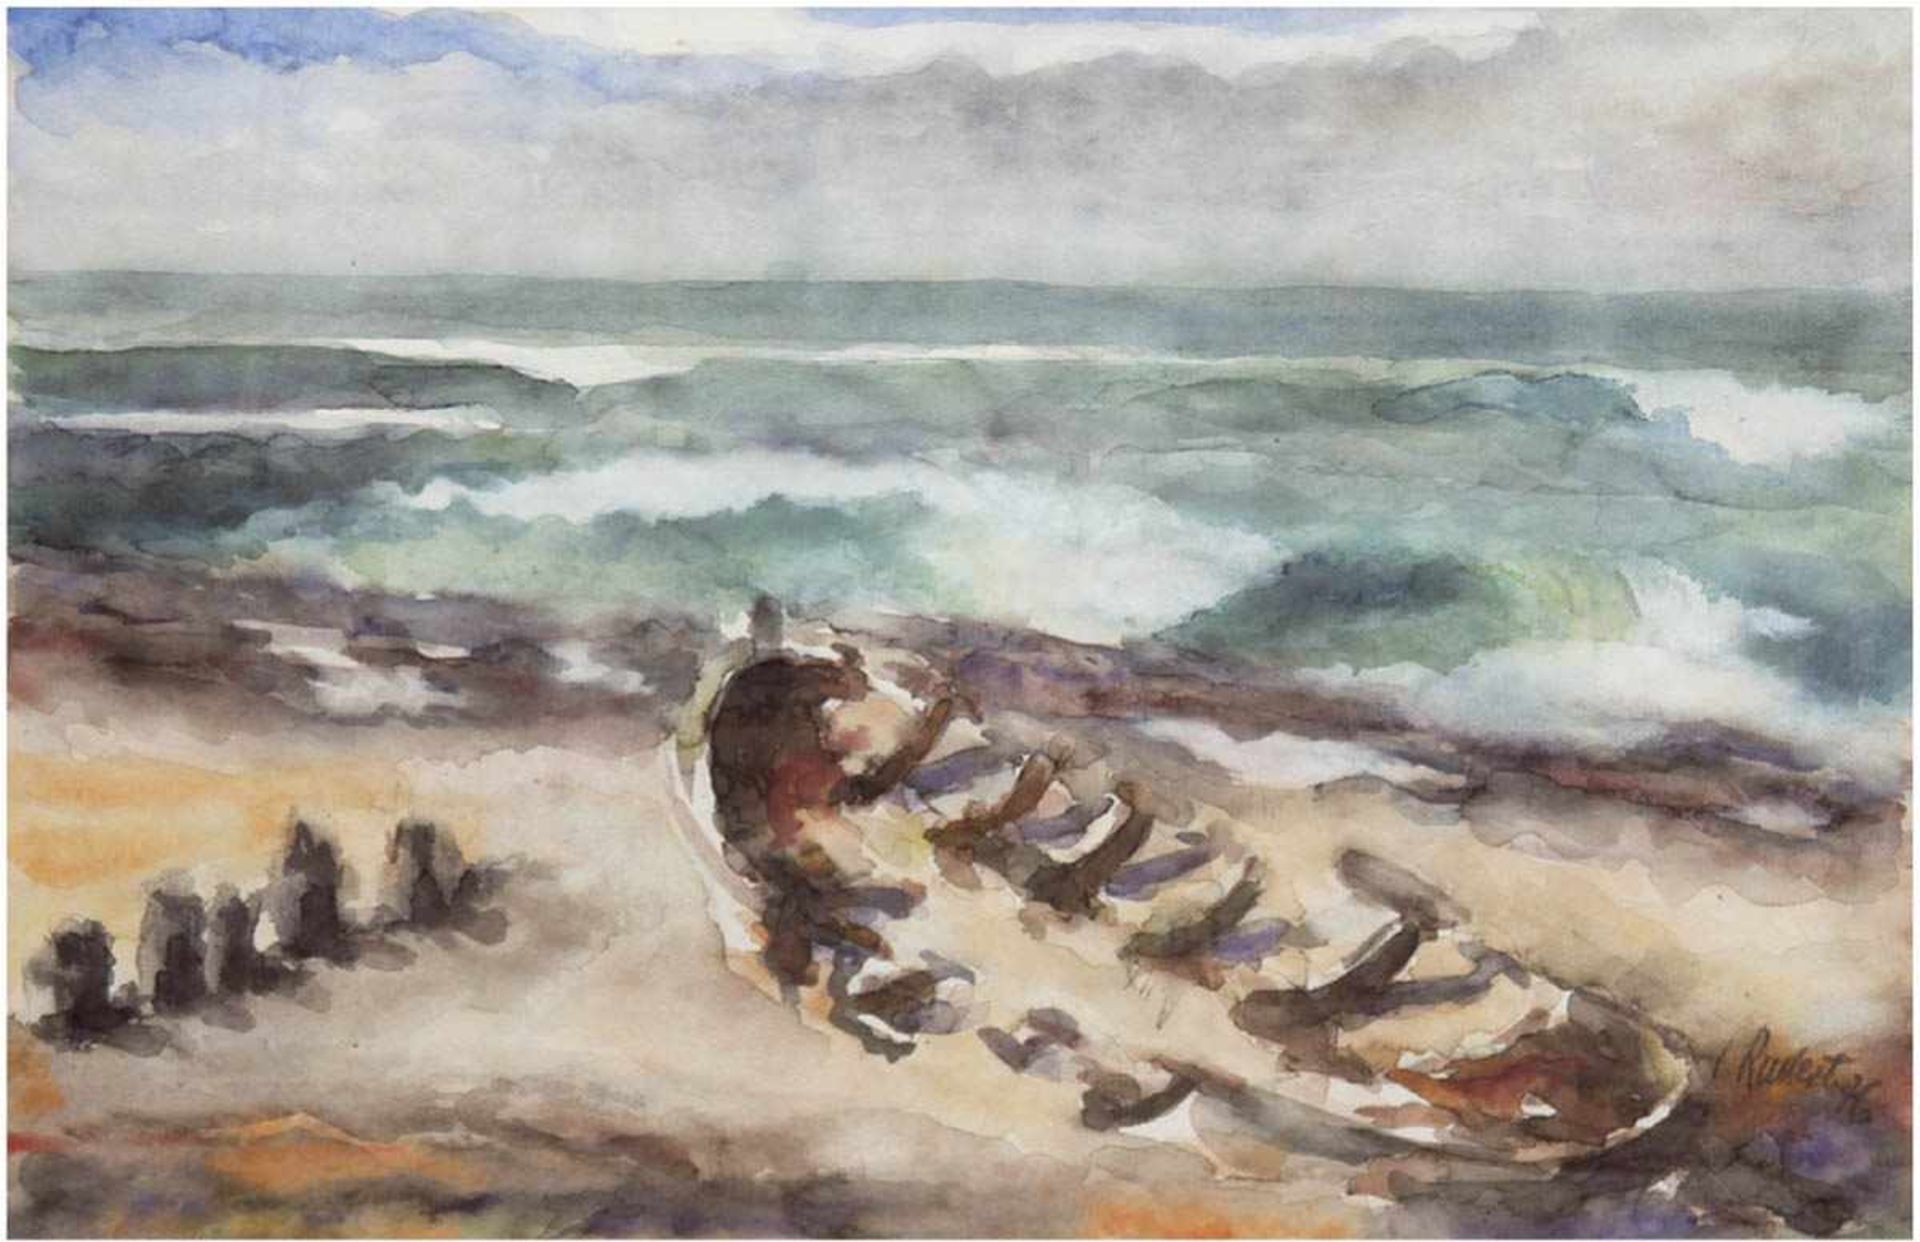 Rudert, Fritz (1899-?) "Bootswrack am Strand", Aquarell, sign. und dat. '76 u.r., 41x61cm, hinter